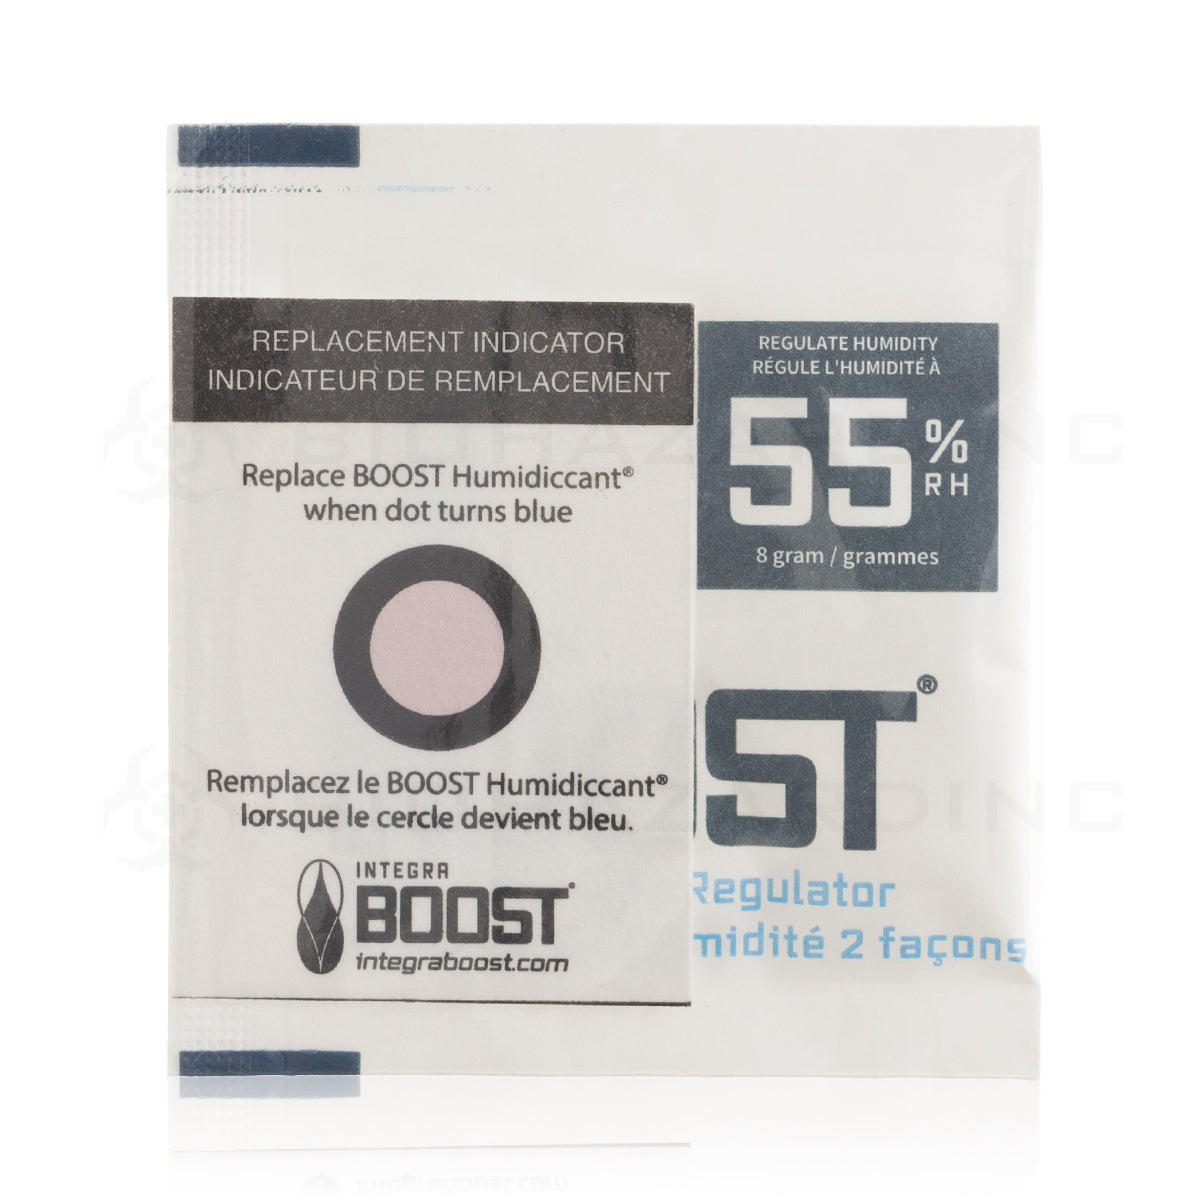 INTEGRA™ | BOOST 'Retail Display' Humidity Packs | 8 Grams - 55% Humidity - 144 Count Humidity Pack Integra   